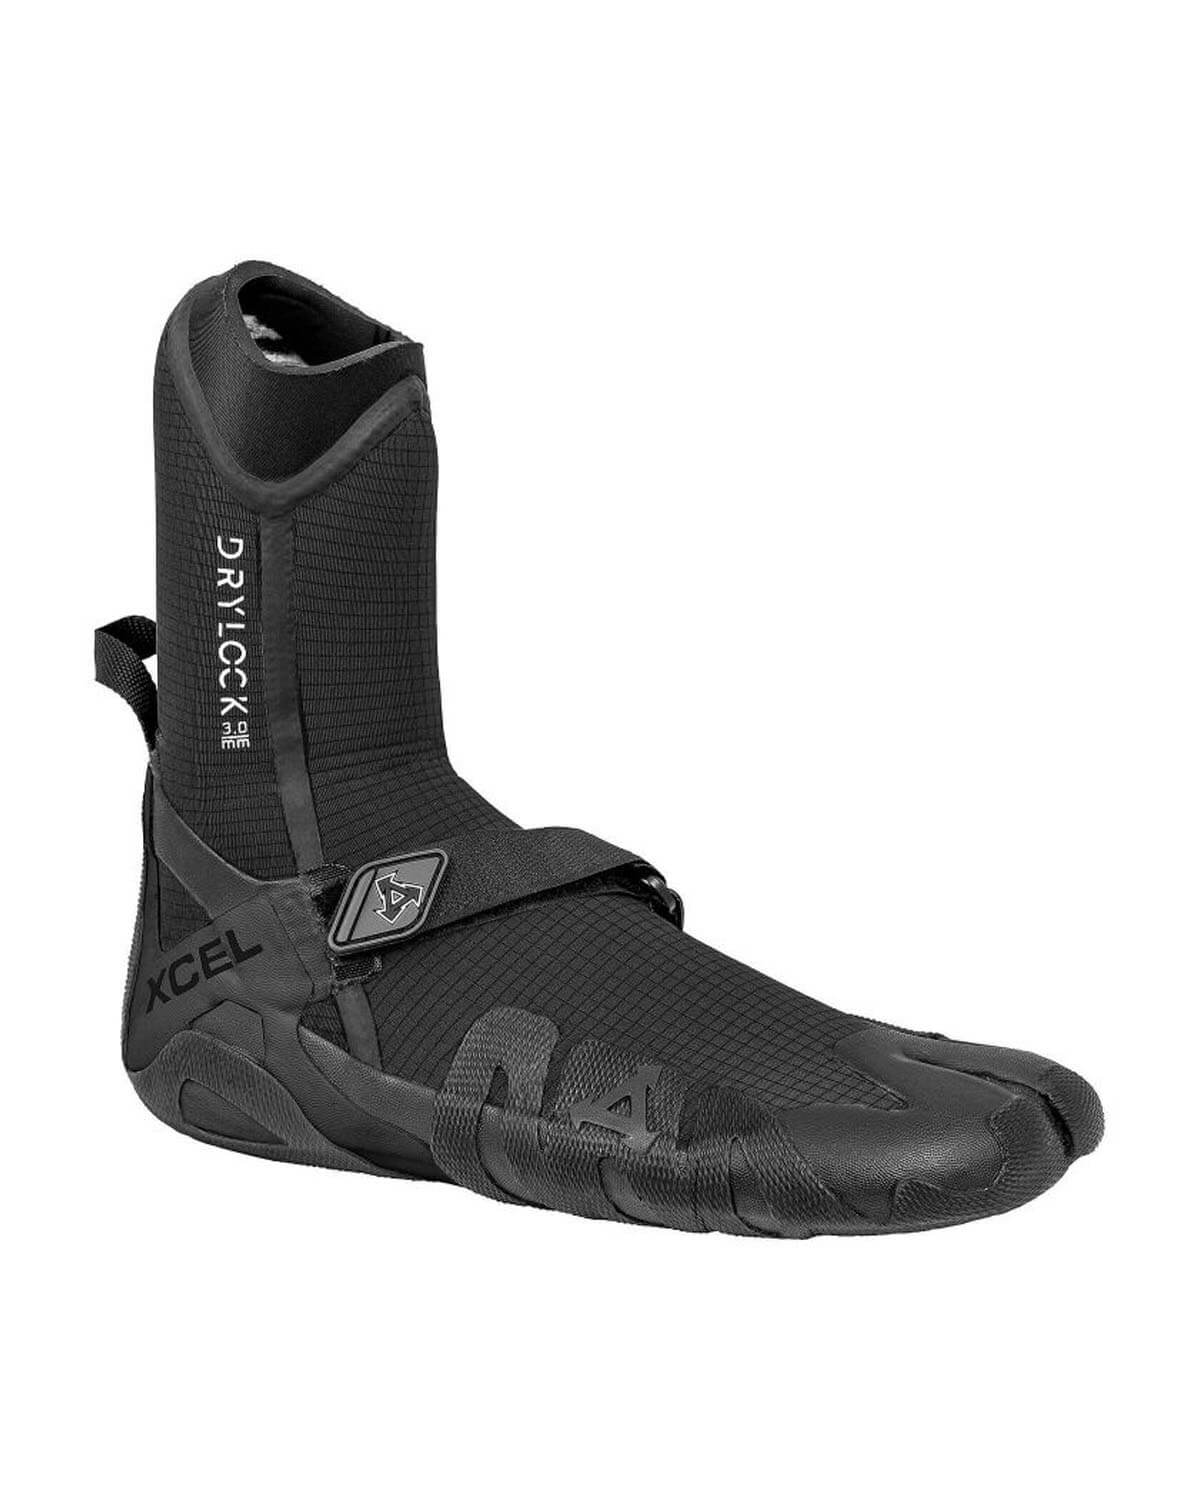 3mm XCEL DRYLOCK Celliant Black Split Toe Boots